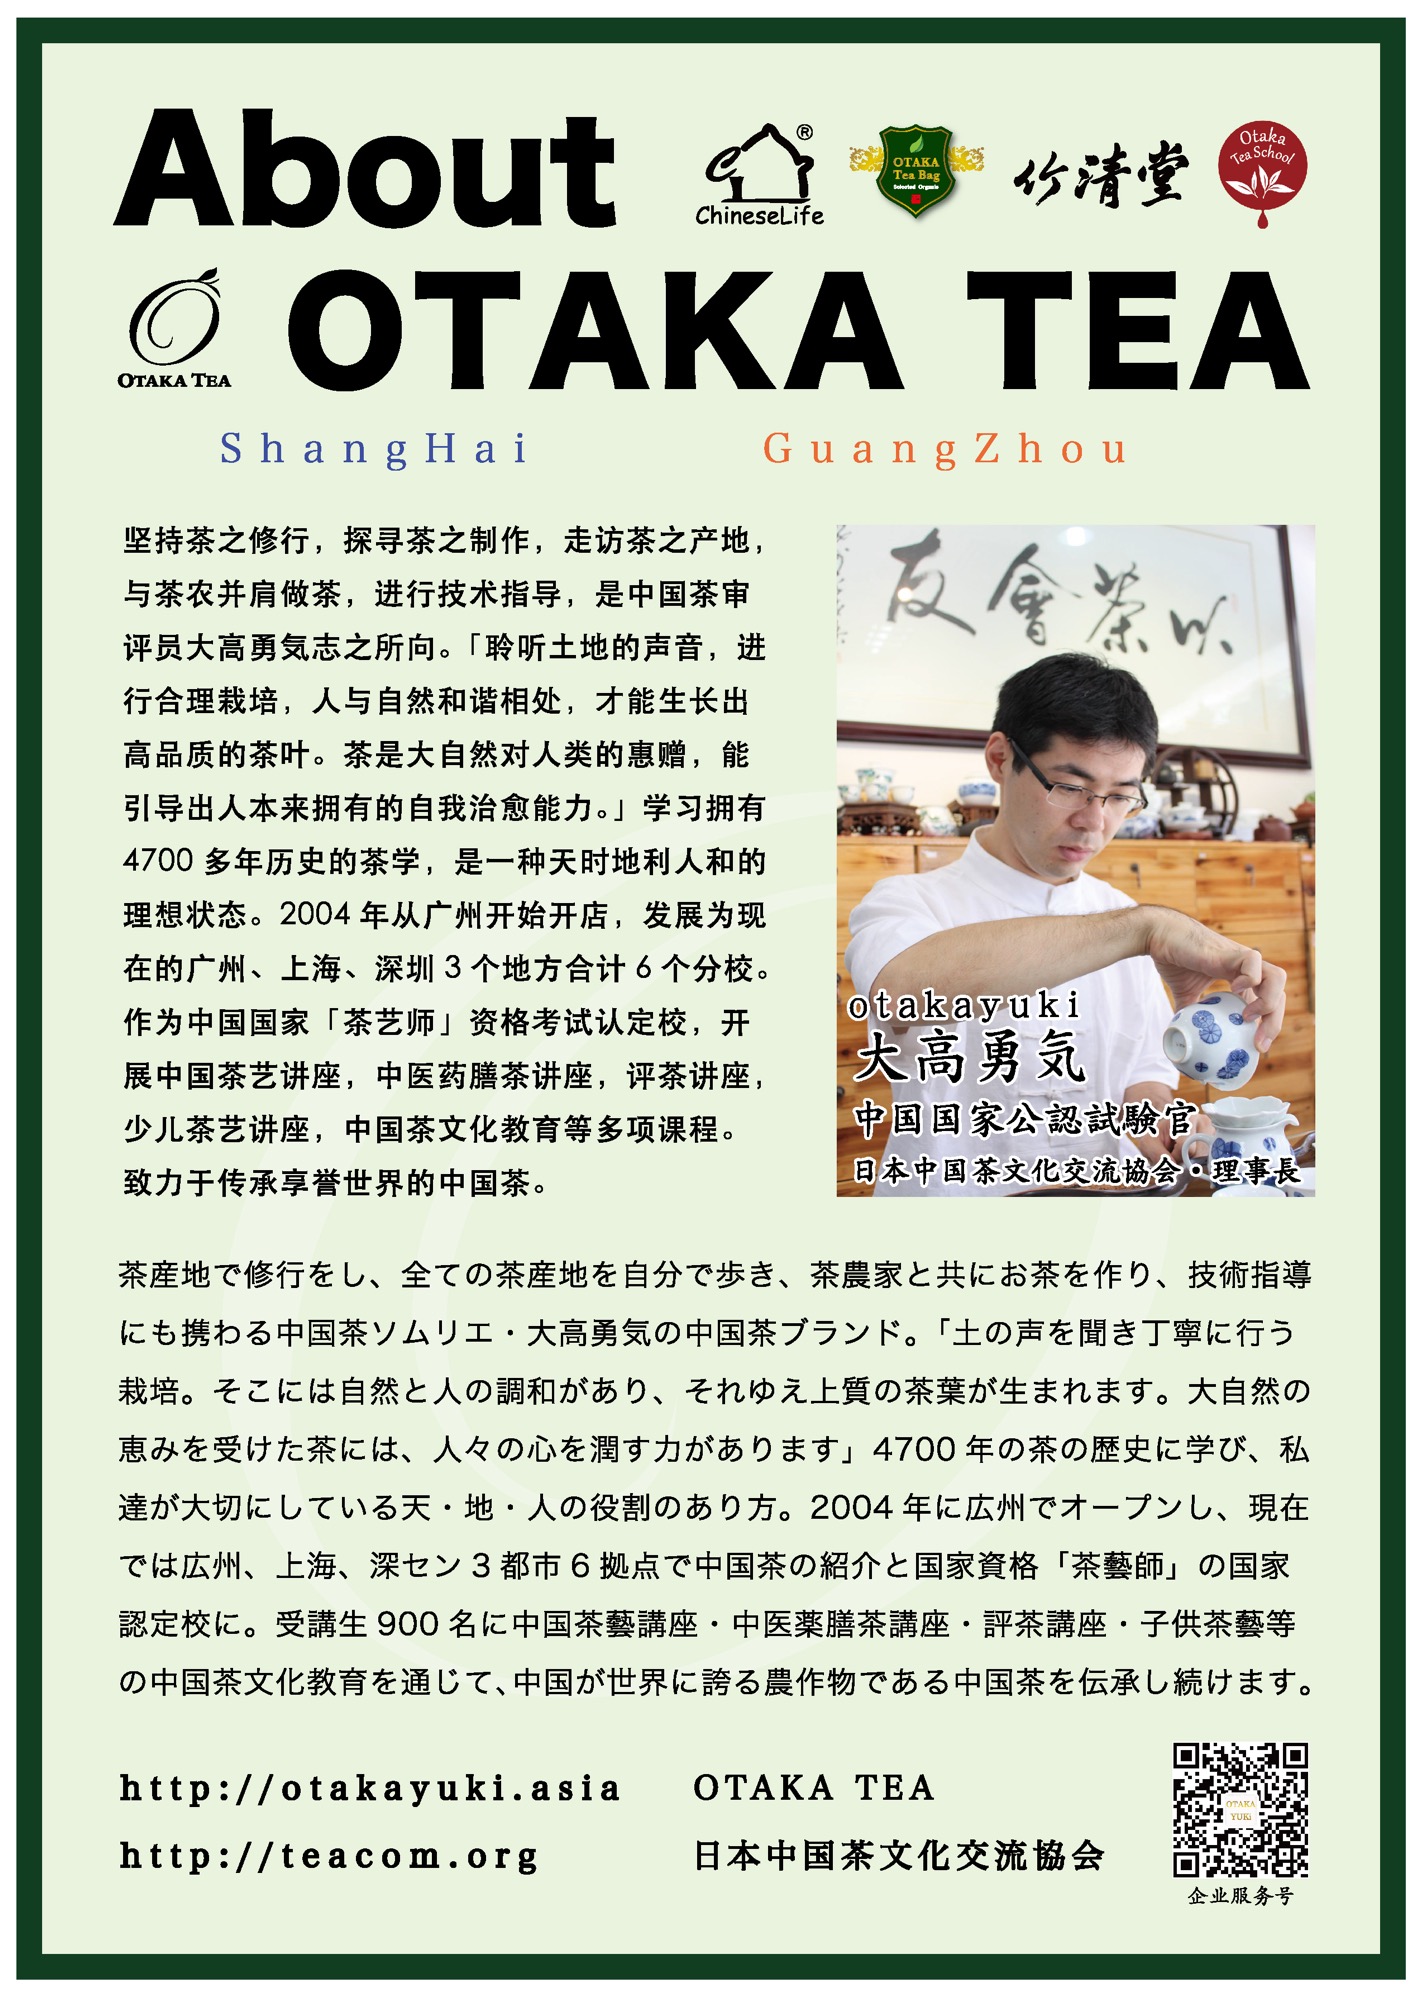 OTAKA TEAについて